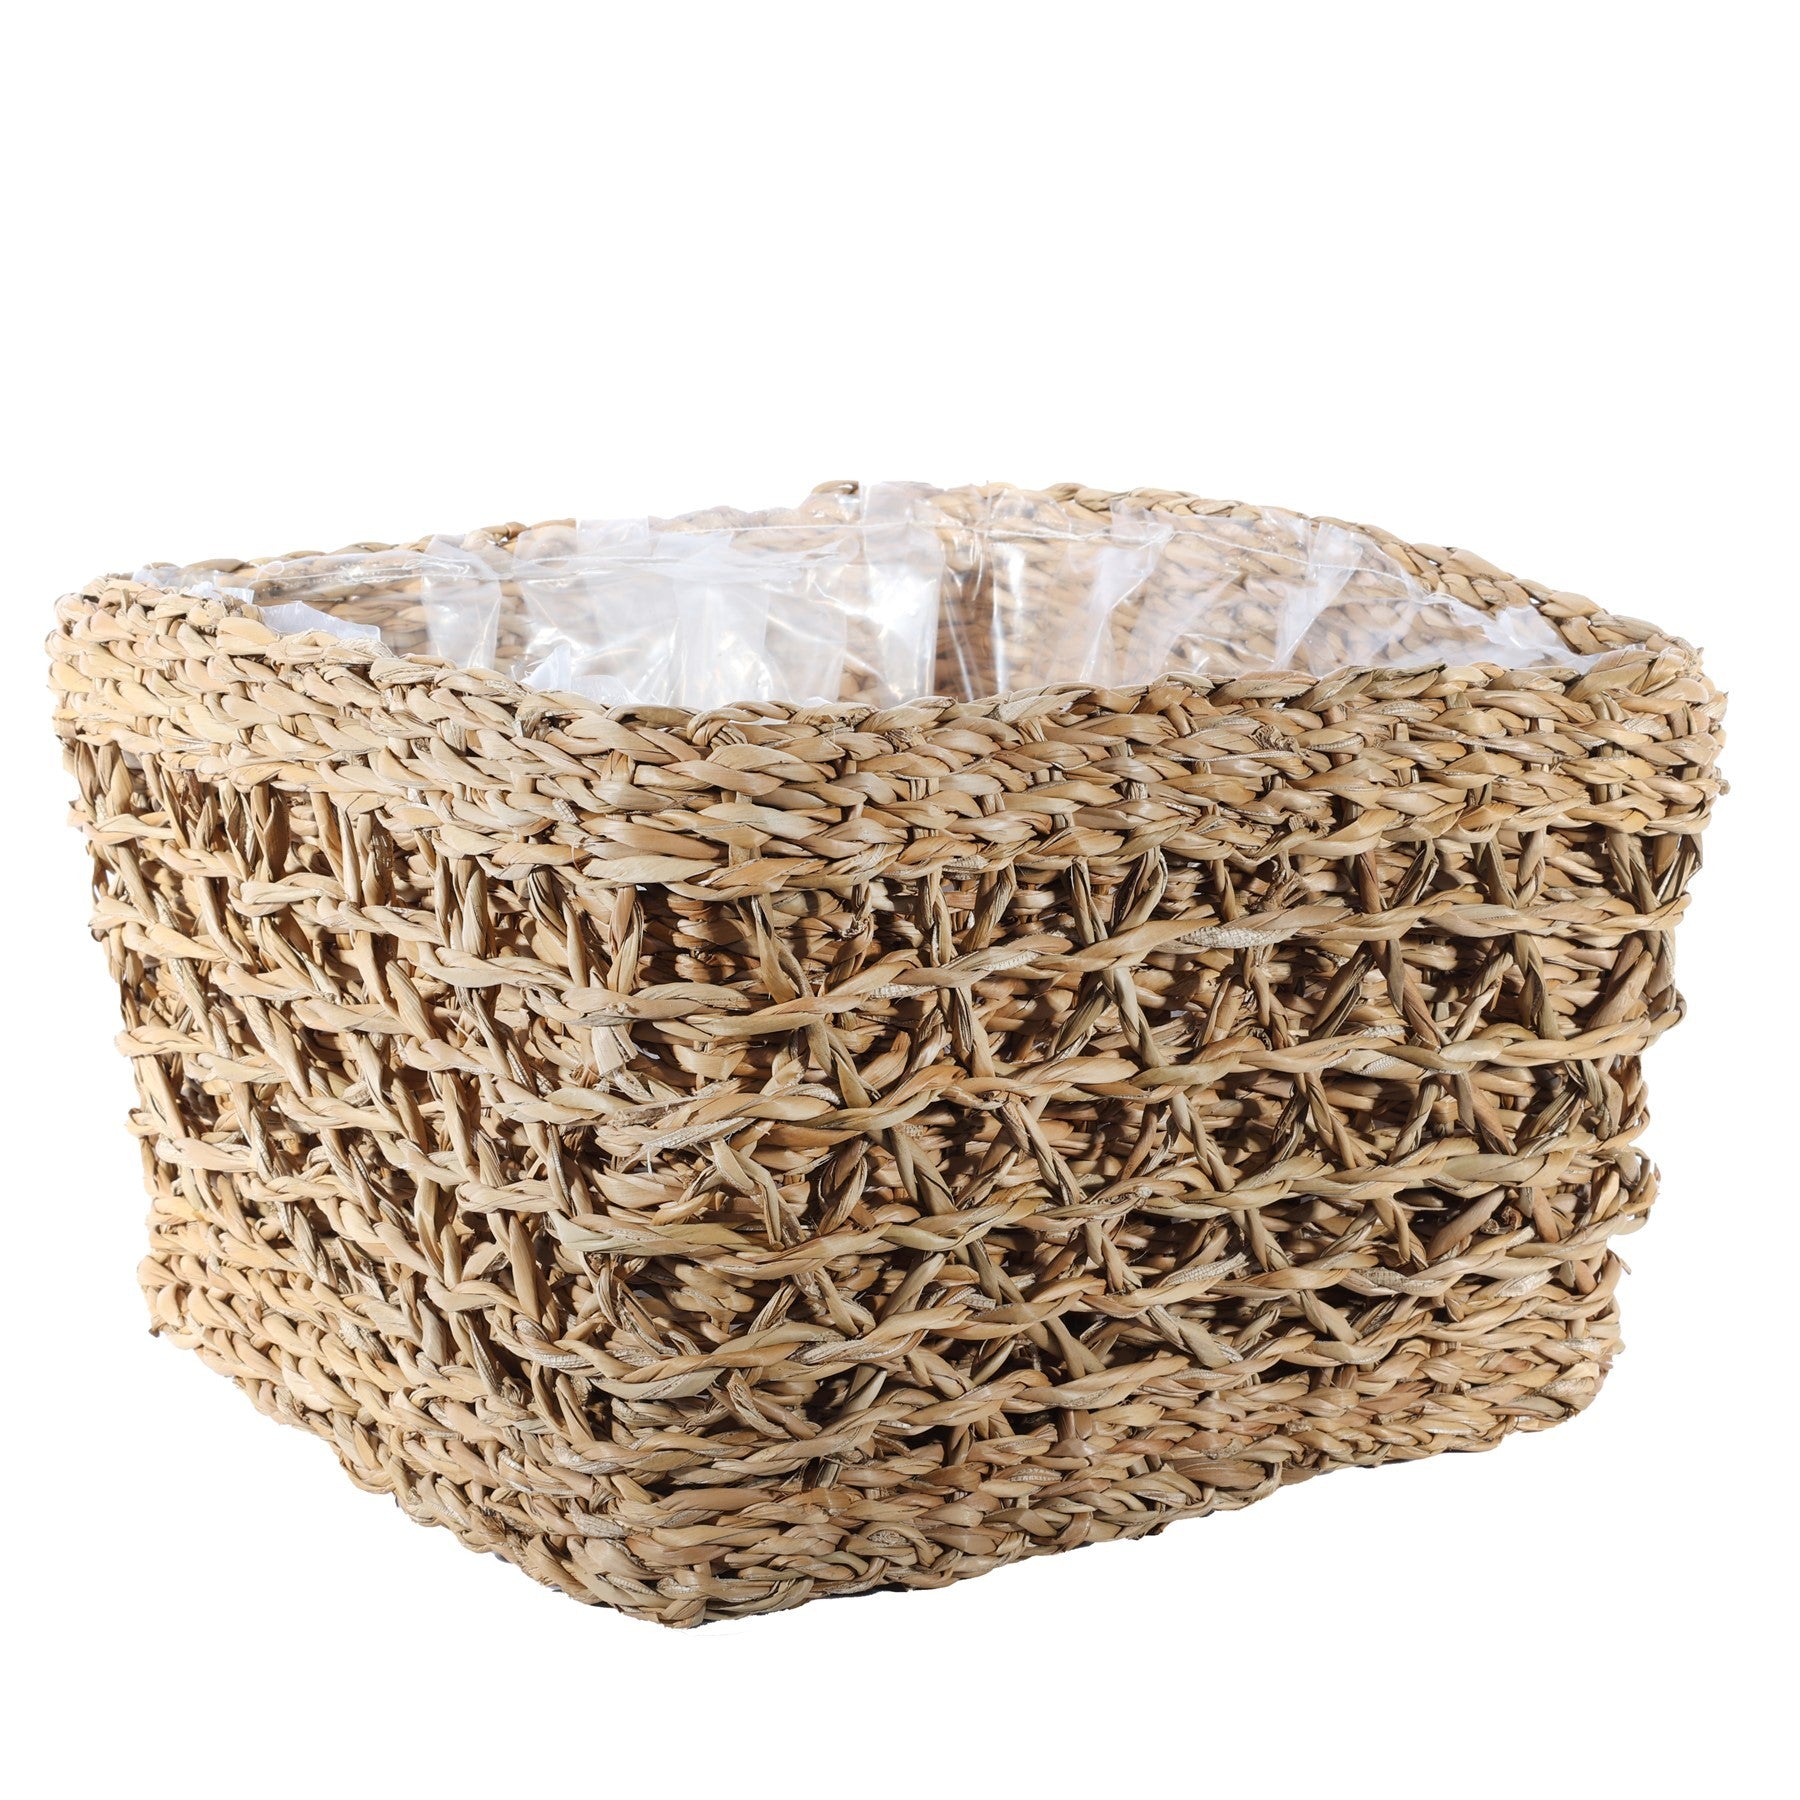 View Square Seagrass Basket 20cm x 30cm x 30cm information